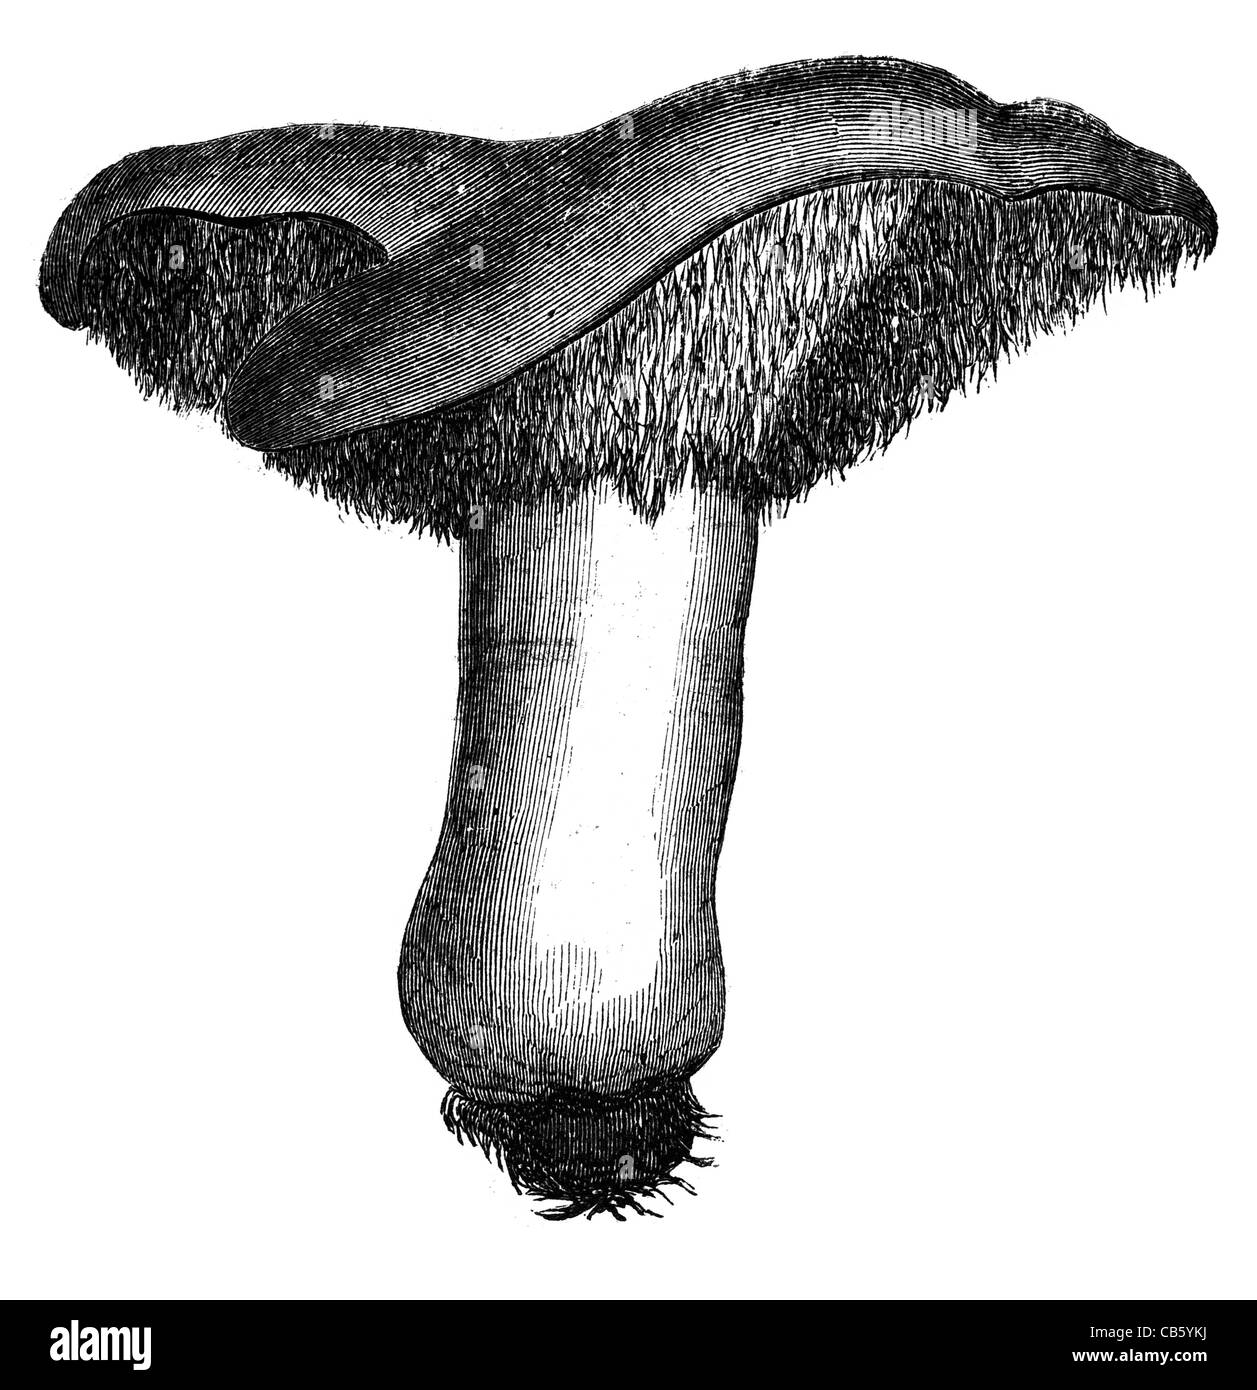 Hydnum Repandum fungus fungi mold mushroom mushrooms plants biology mycology botany Stock Photo